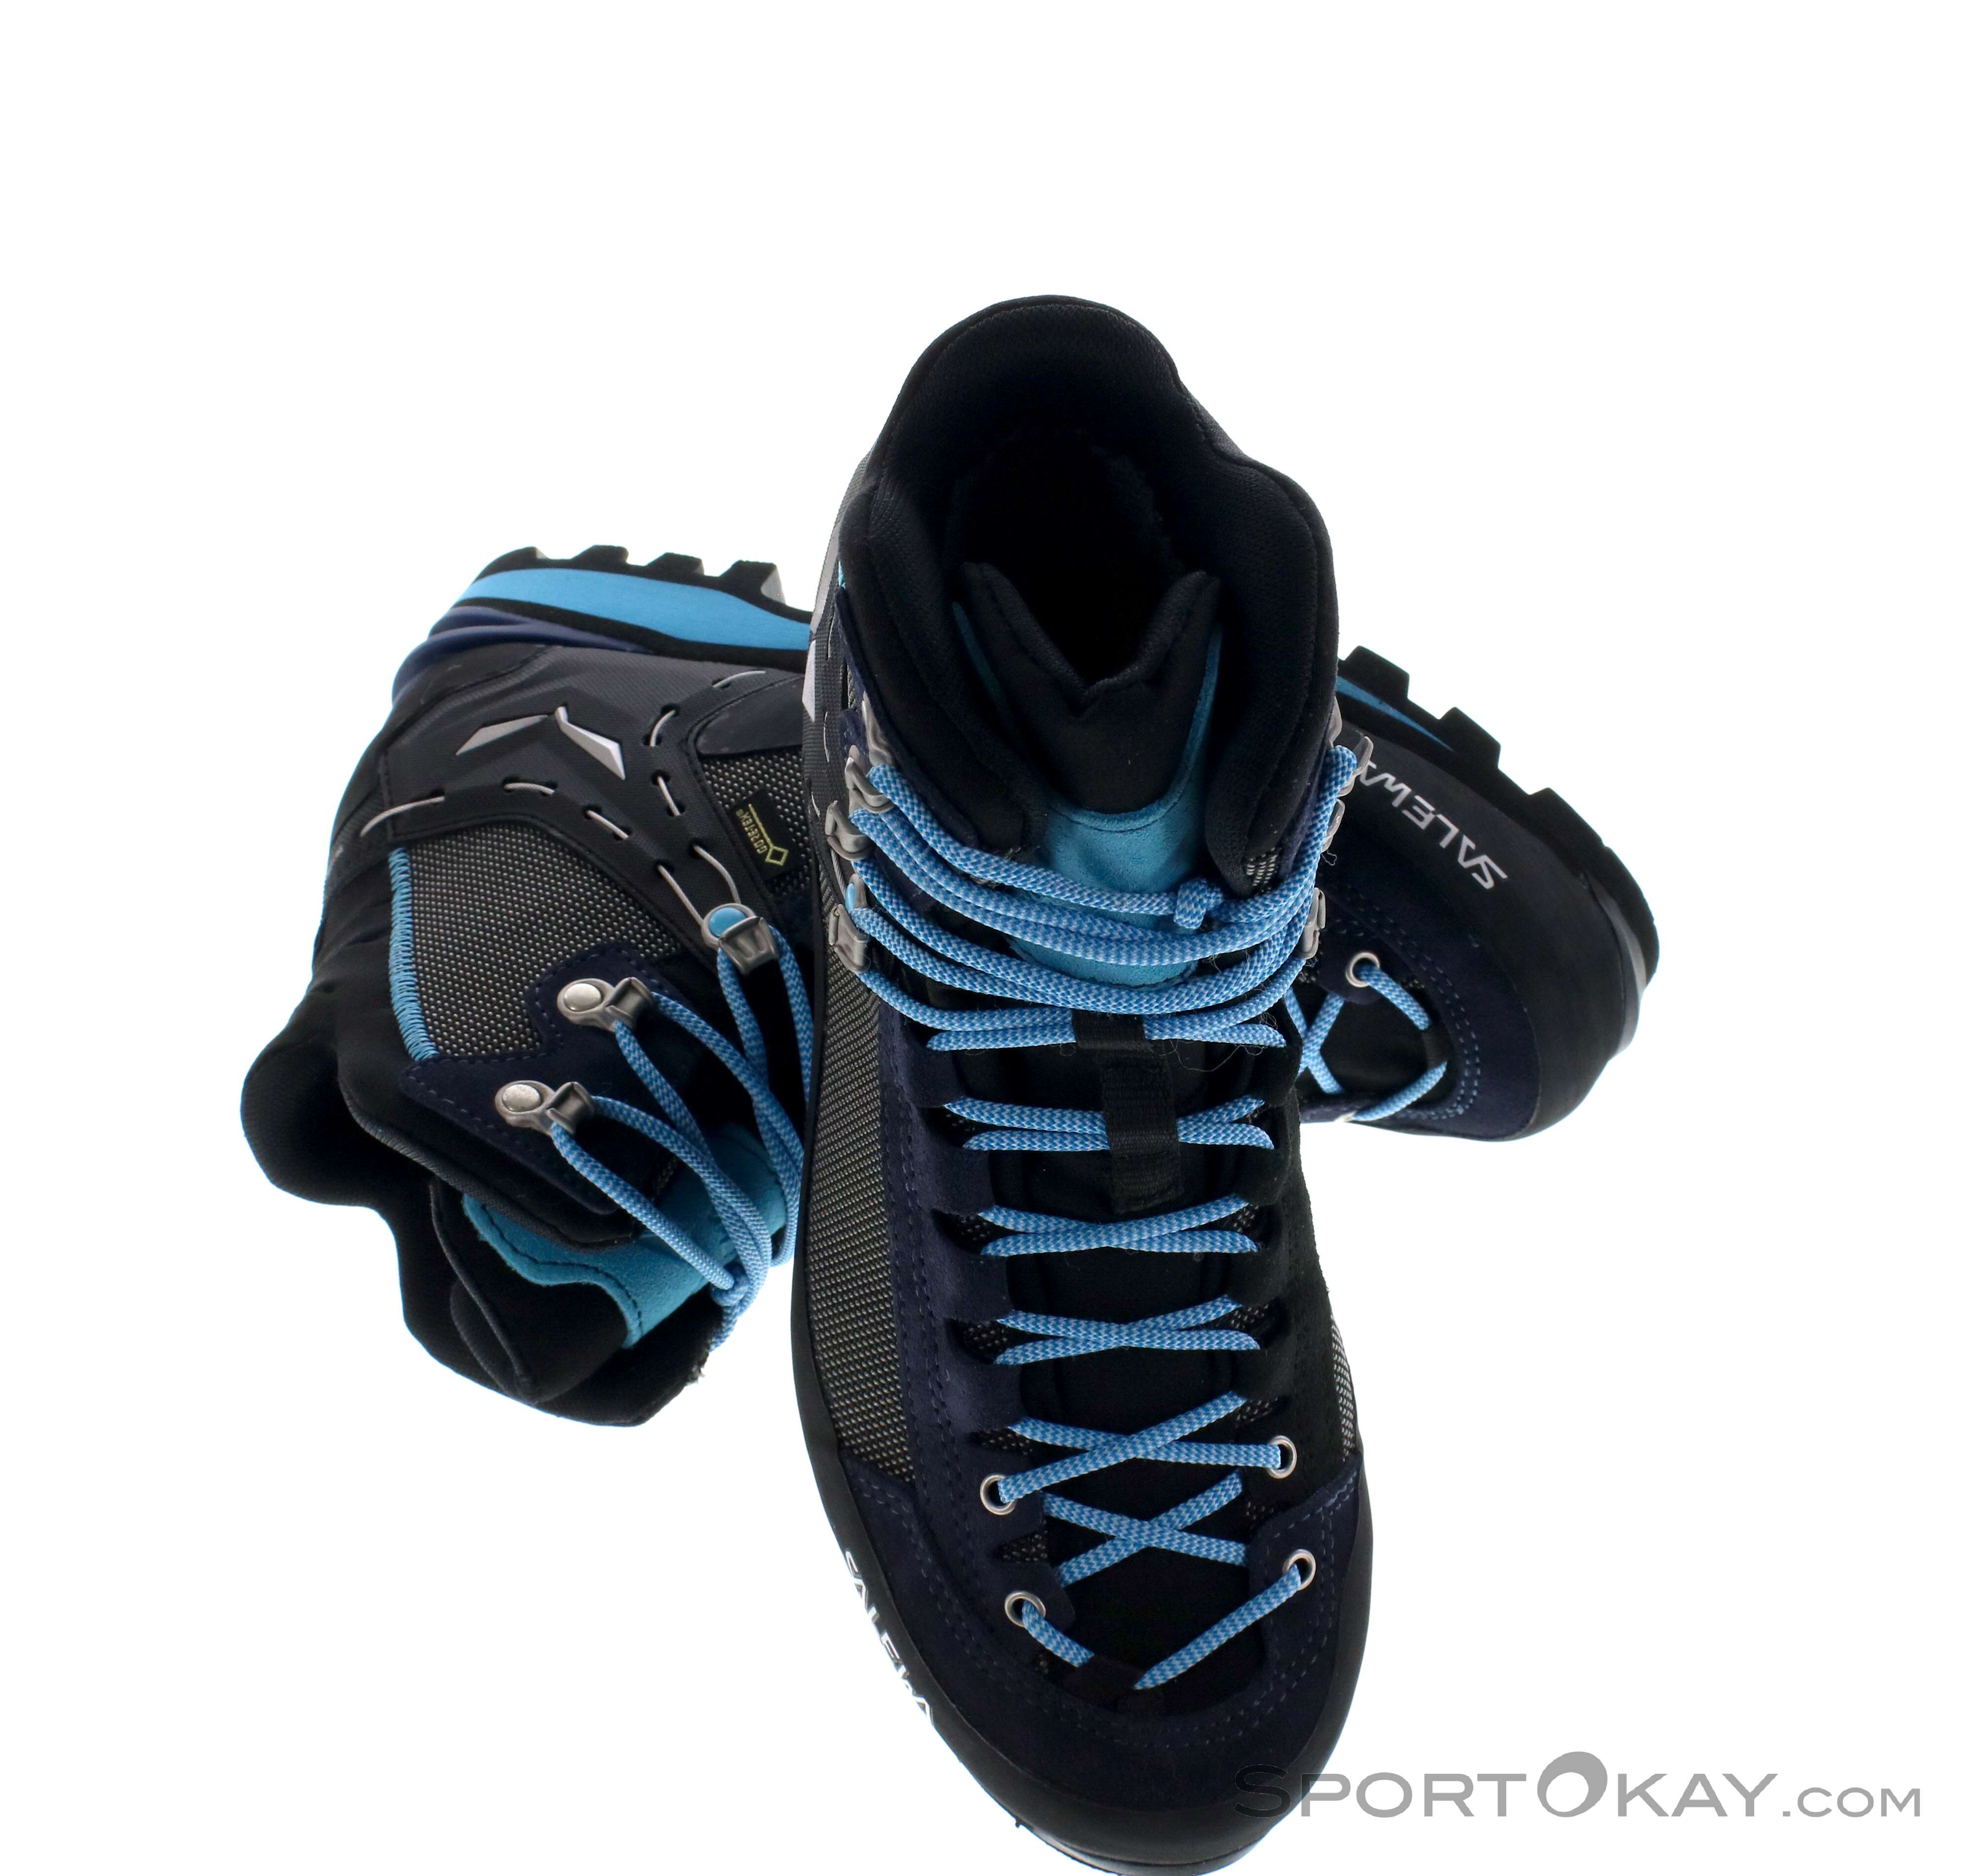 Salewa Ws Crow Gtx Premium Navy/Ethernal Blue Calzado montañismo